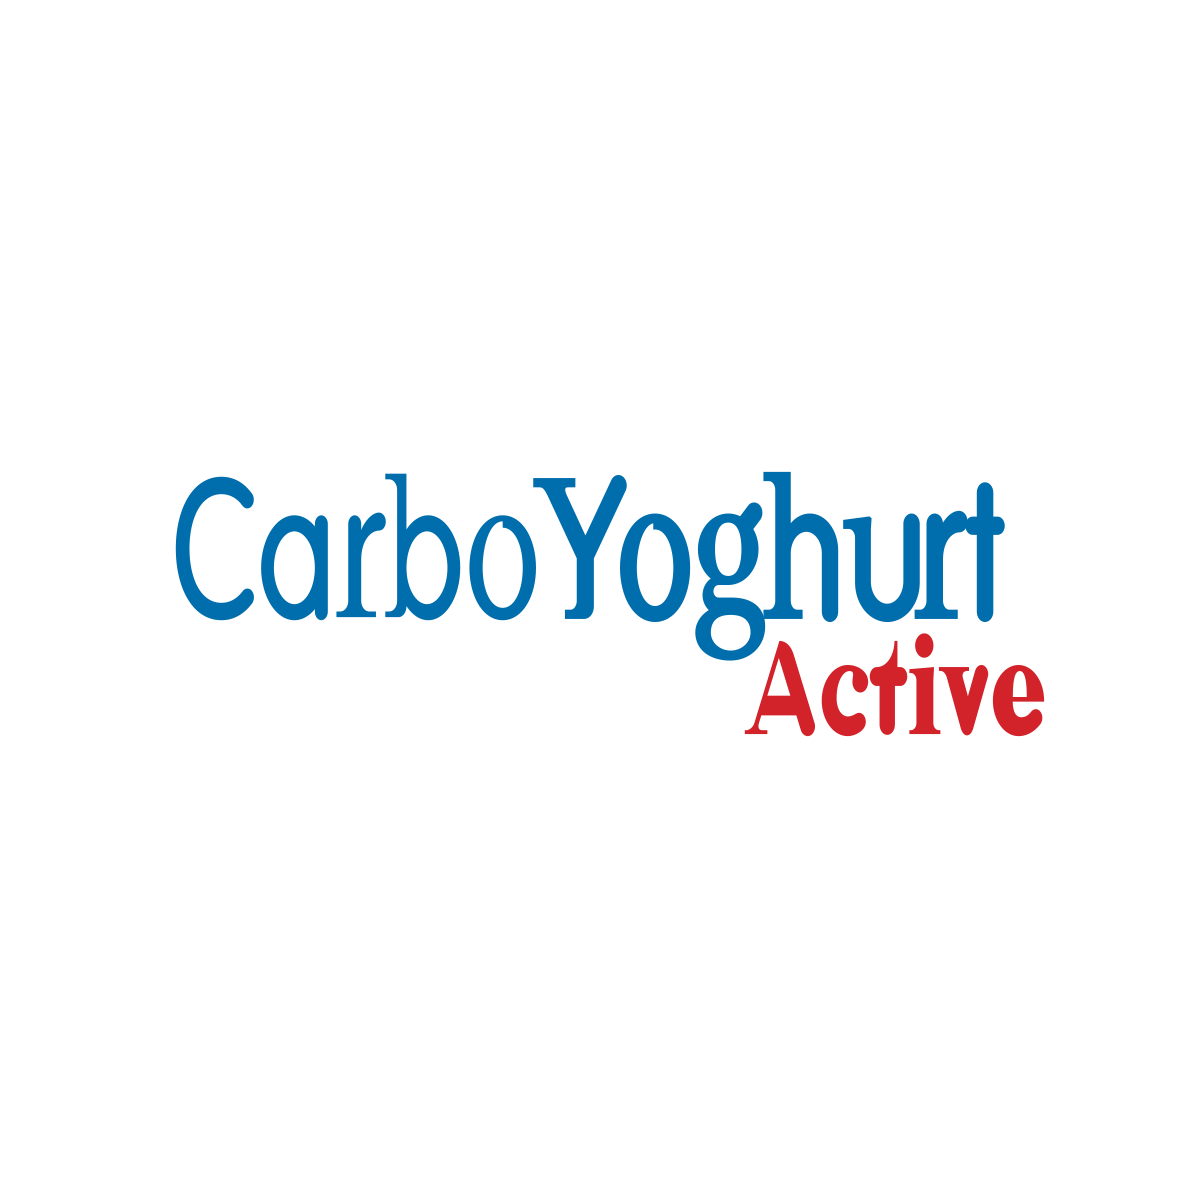 CarboYogurt Active